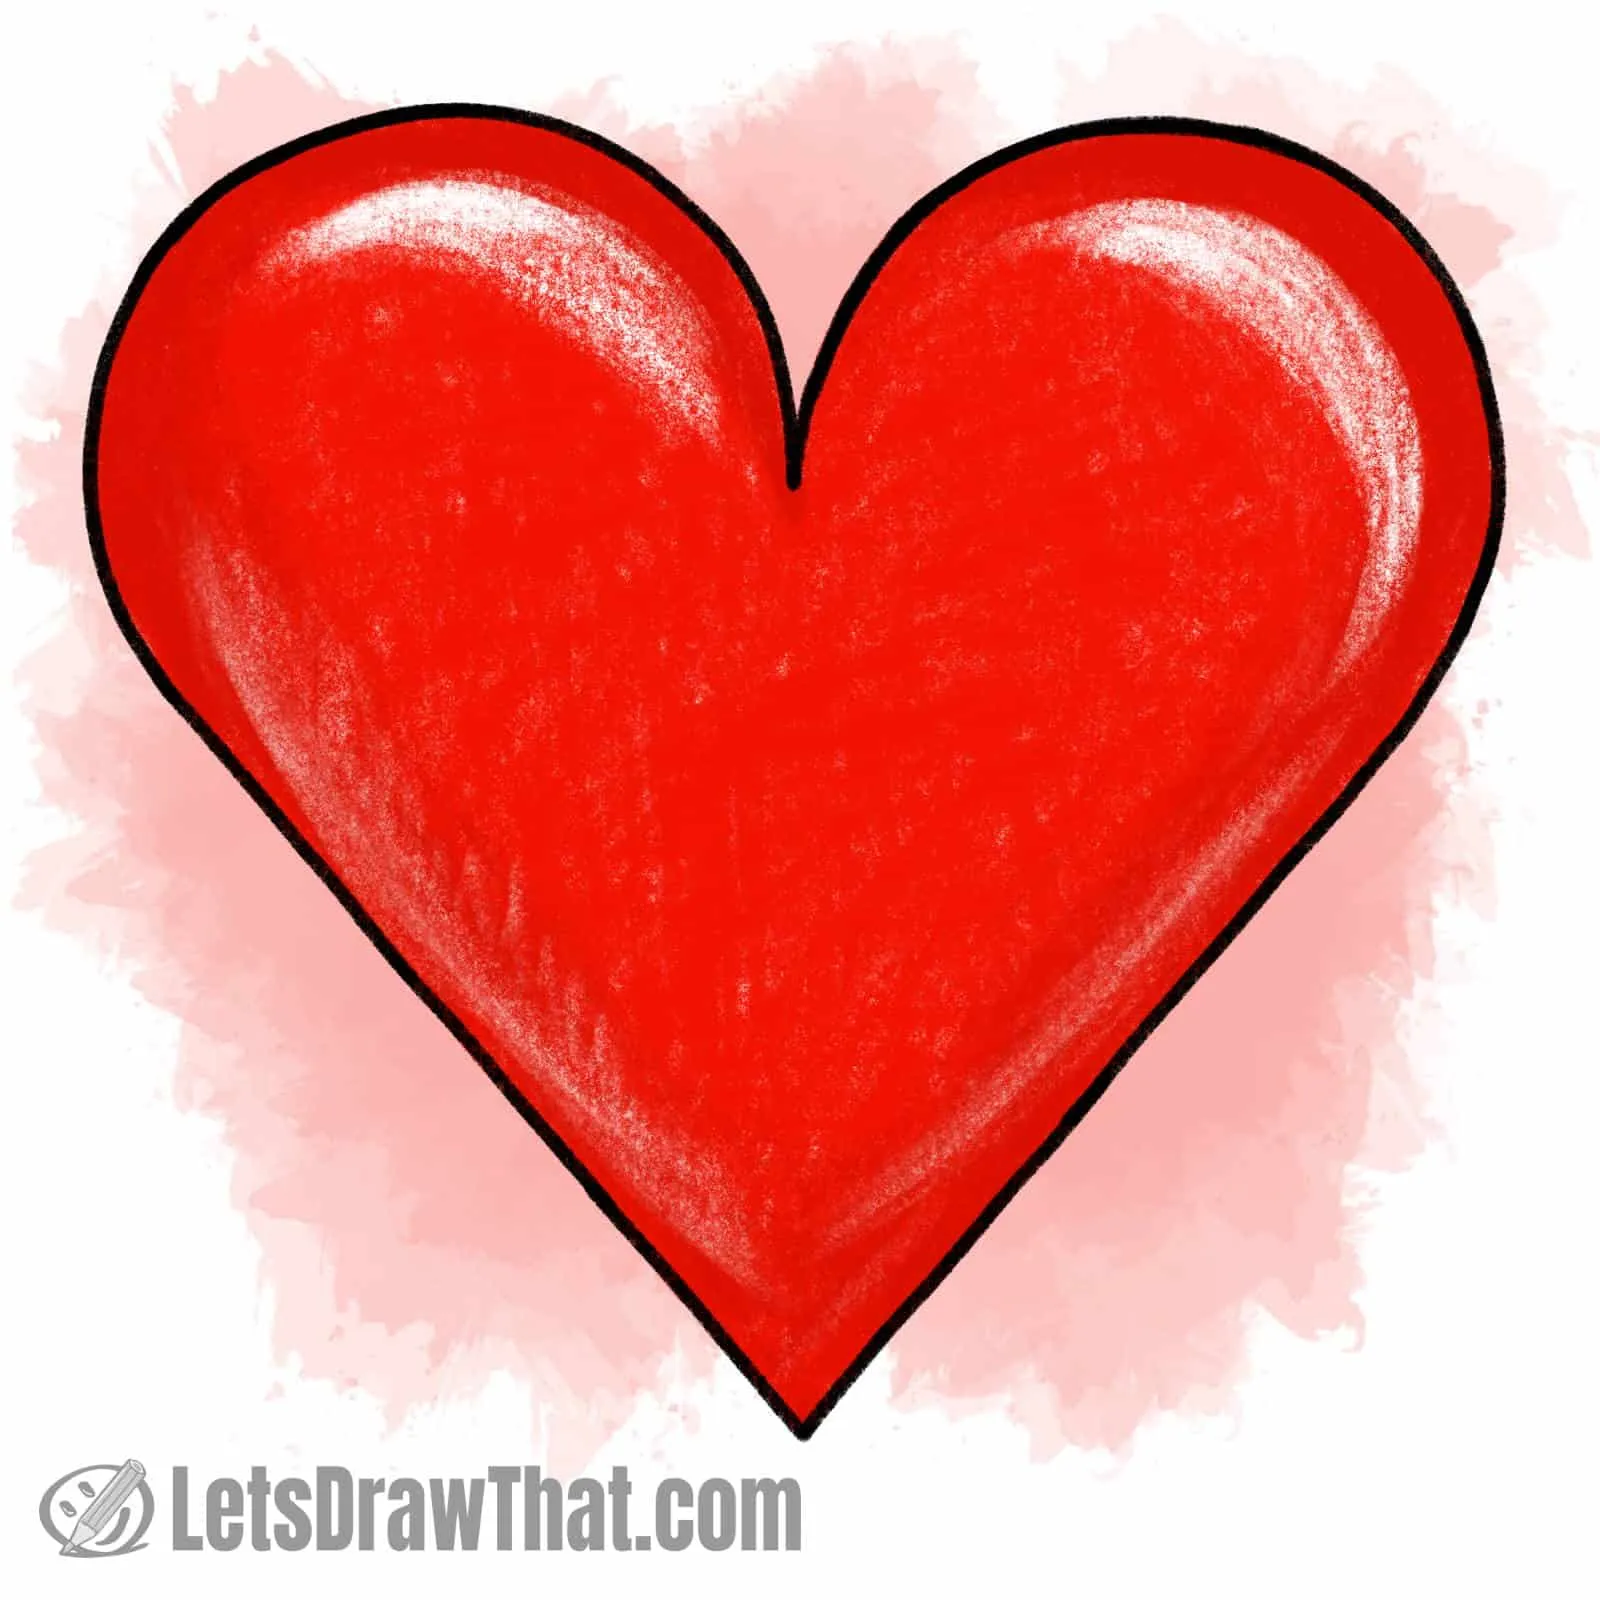 Human heart drawing line work Royalty Free Vector Image-saigonsouth.com.vn